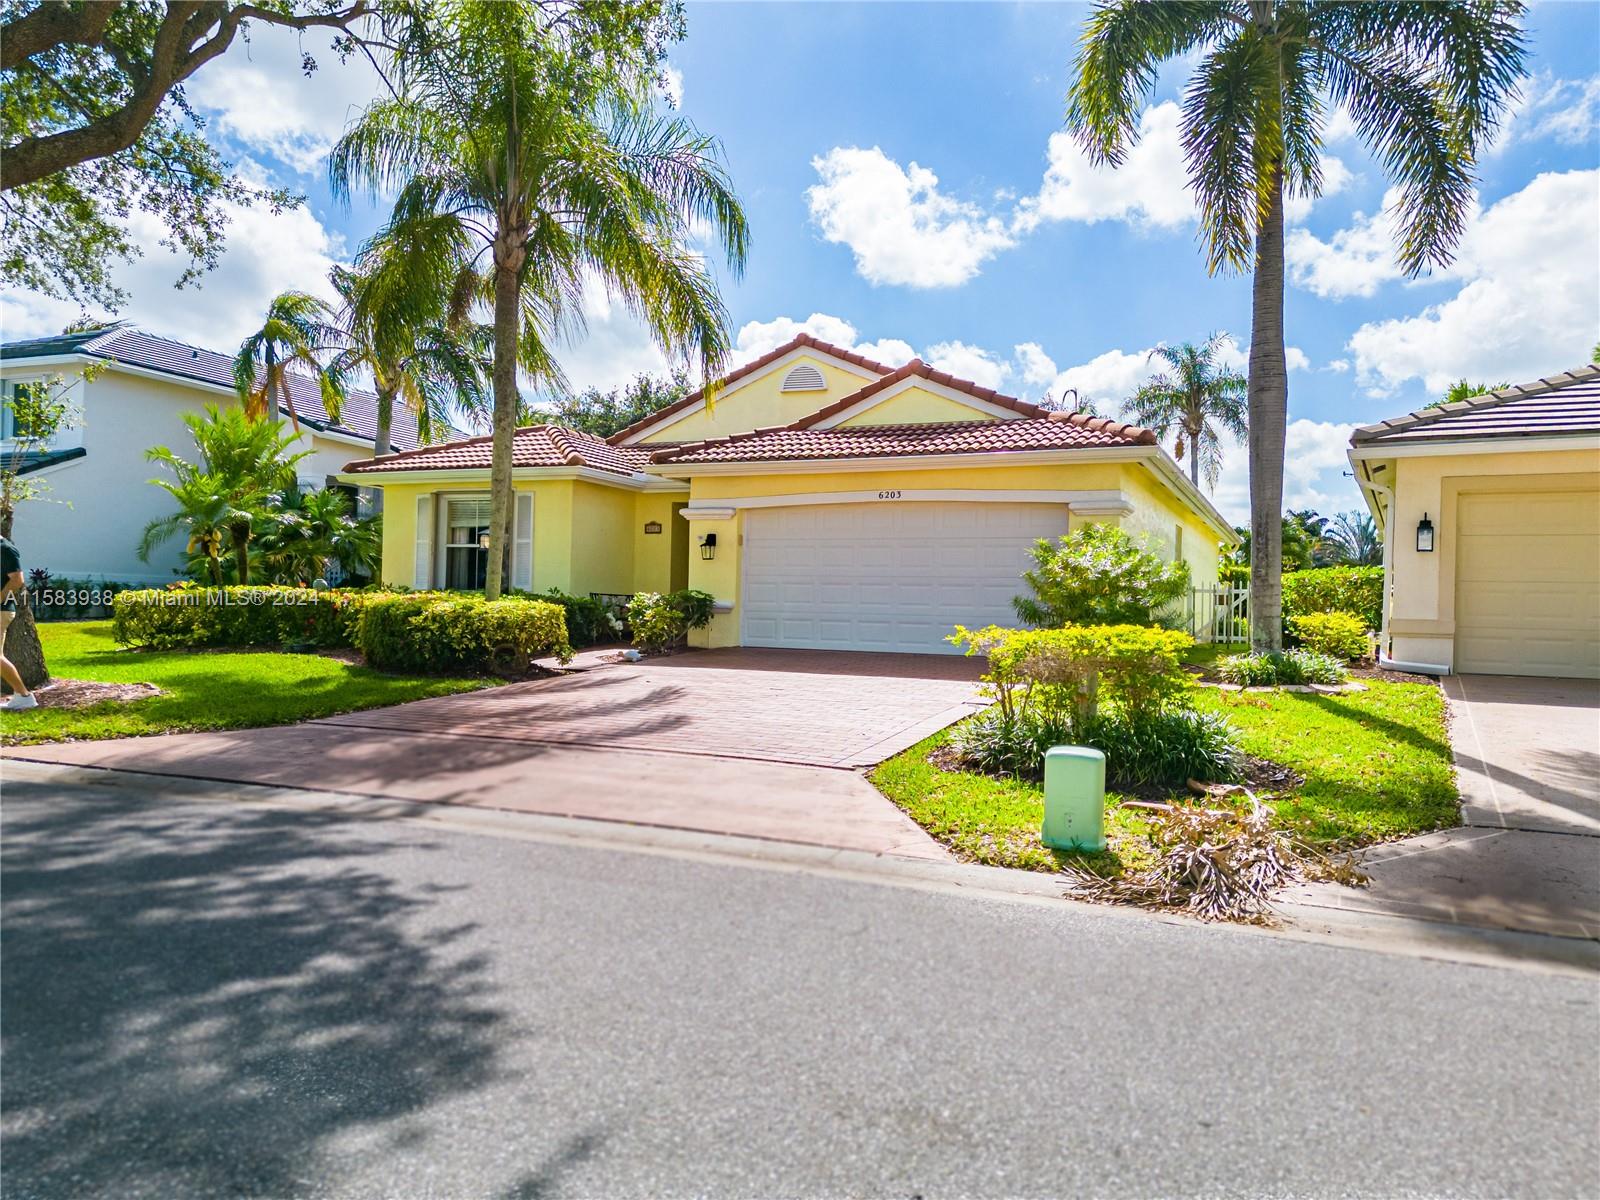 Property for Sale at 6203 Grand Cypress Cir Cir, Lake Worth, Palm Beach County, Florida - Bedrooms: 3 
Bathrooms: 2  - $580,000